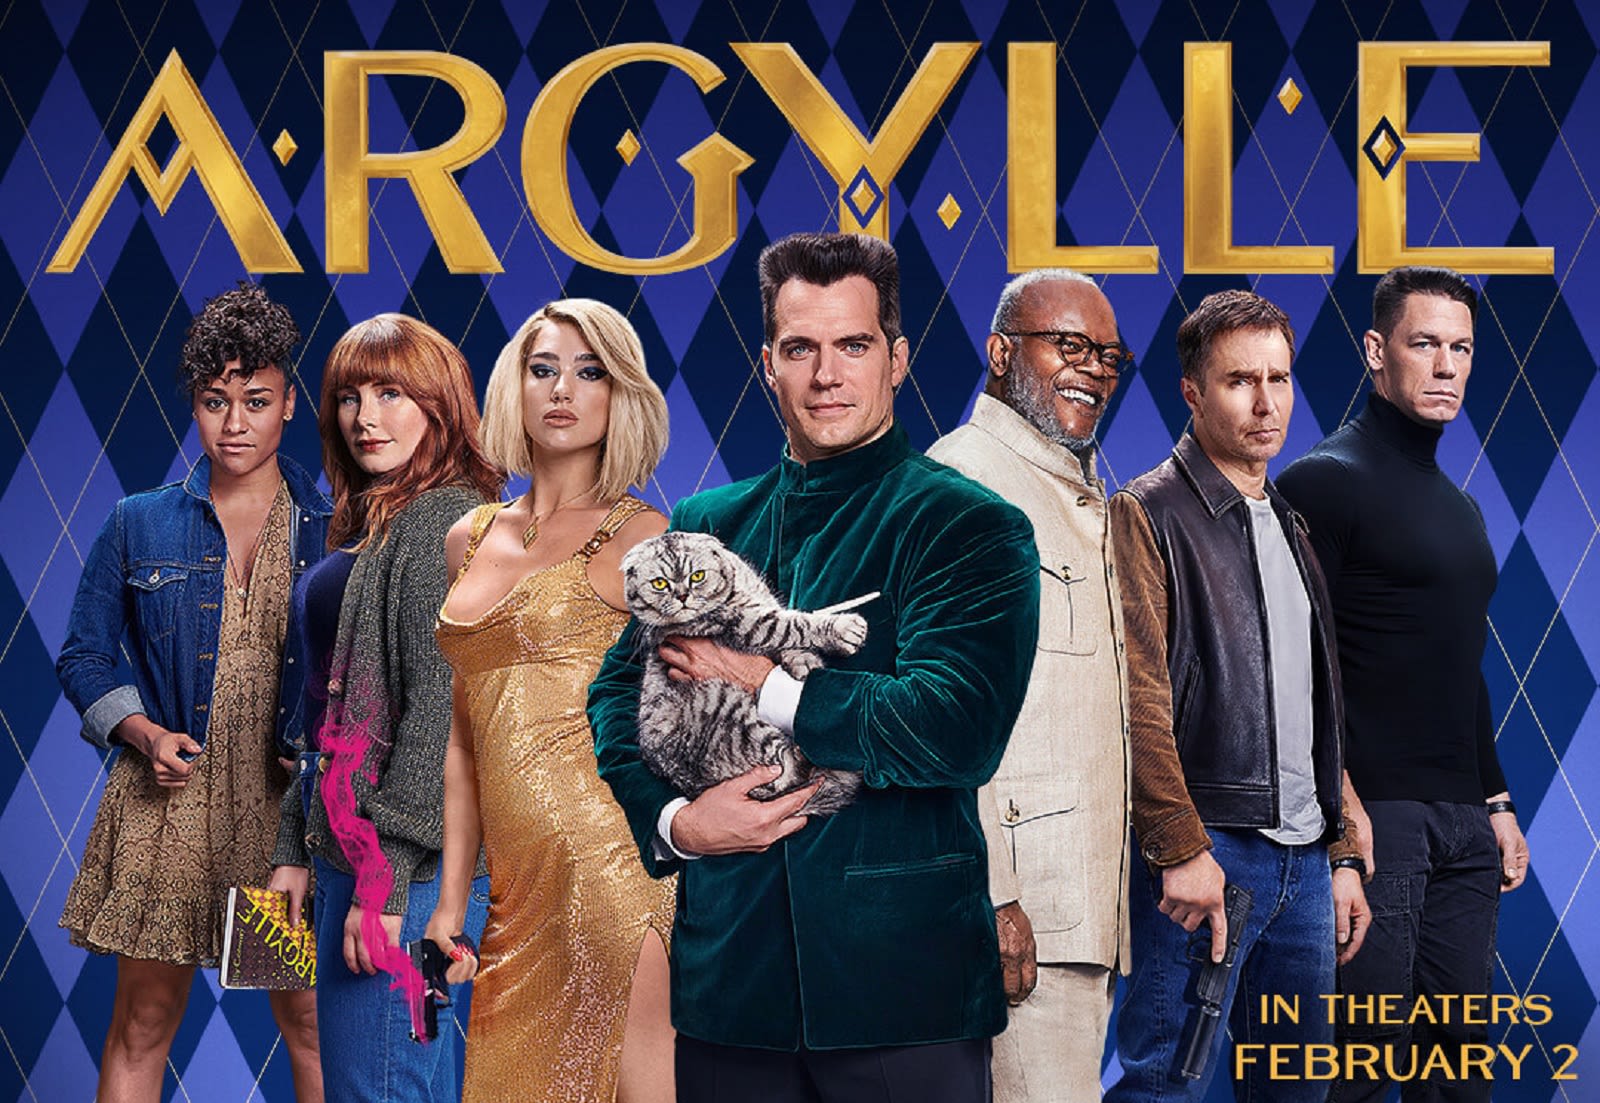 Argylle - Film Comedy Action yang Penuh dengan Bintang Hollywood